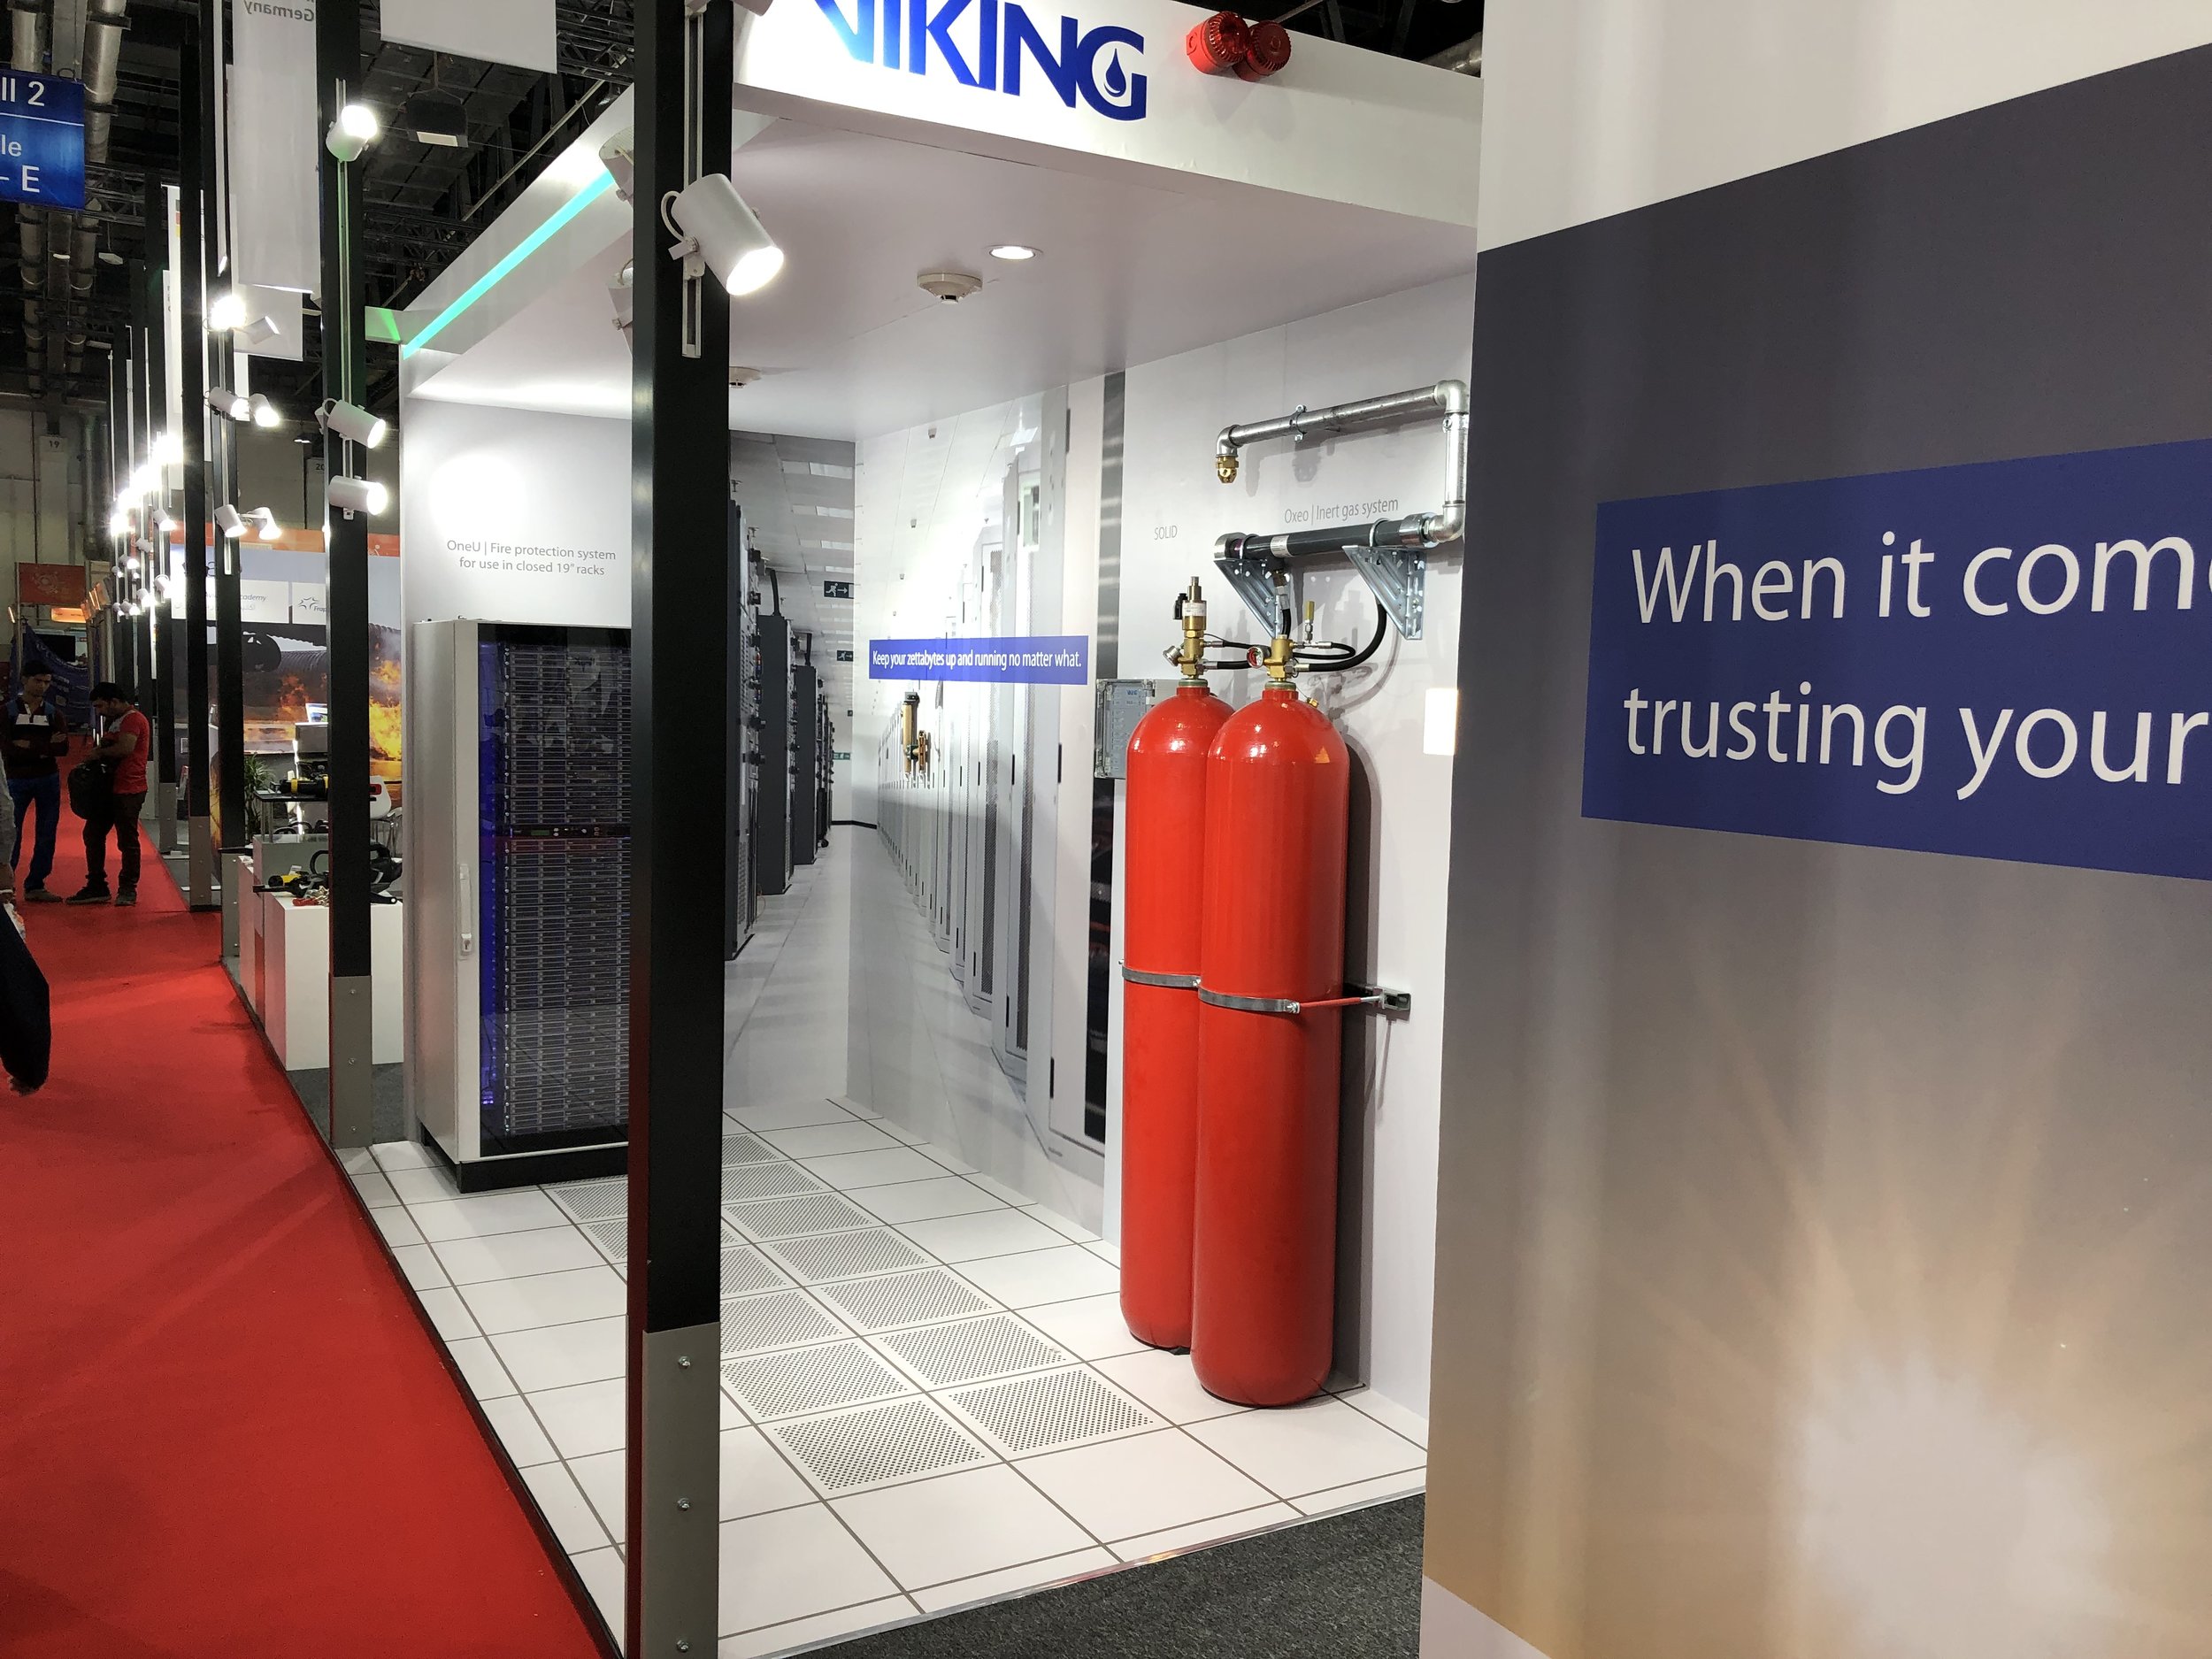   Viking Fire Protection   Intersec Dubai 2020 